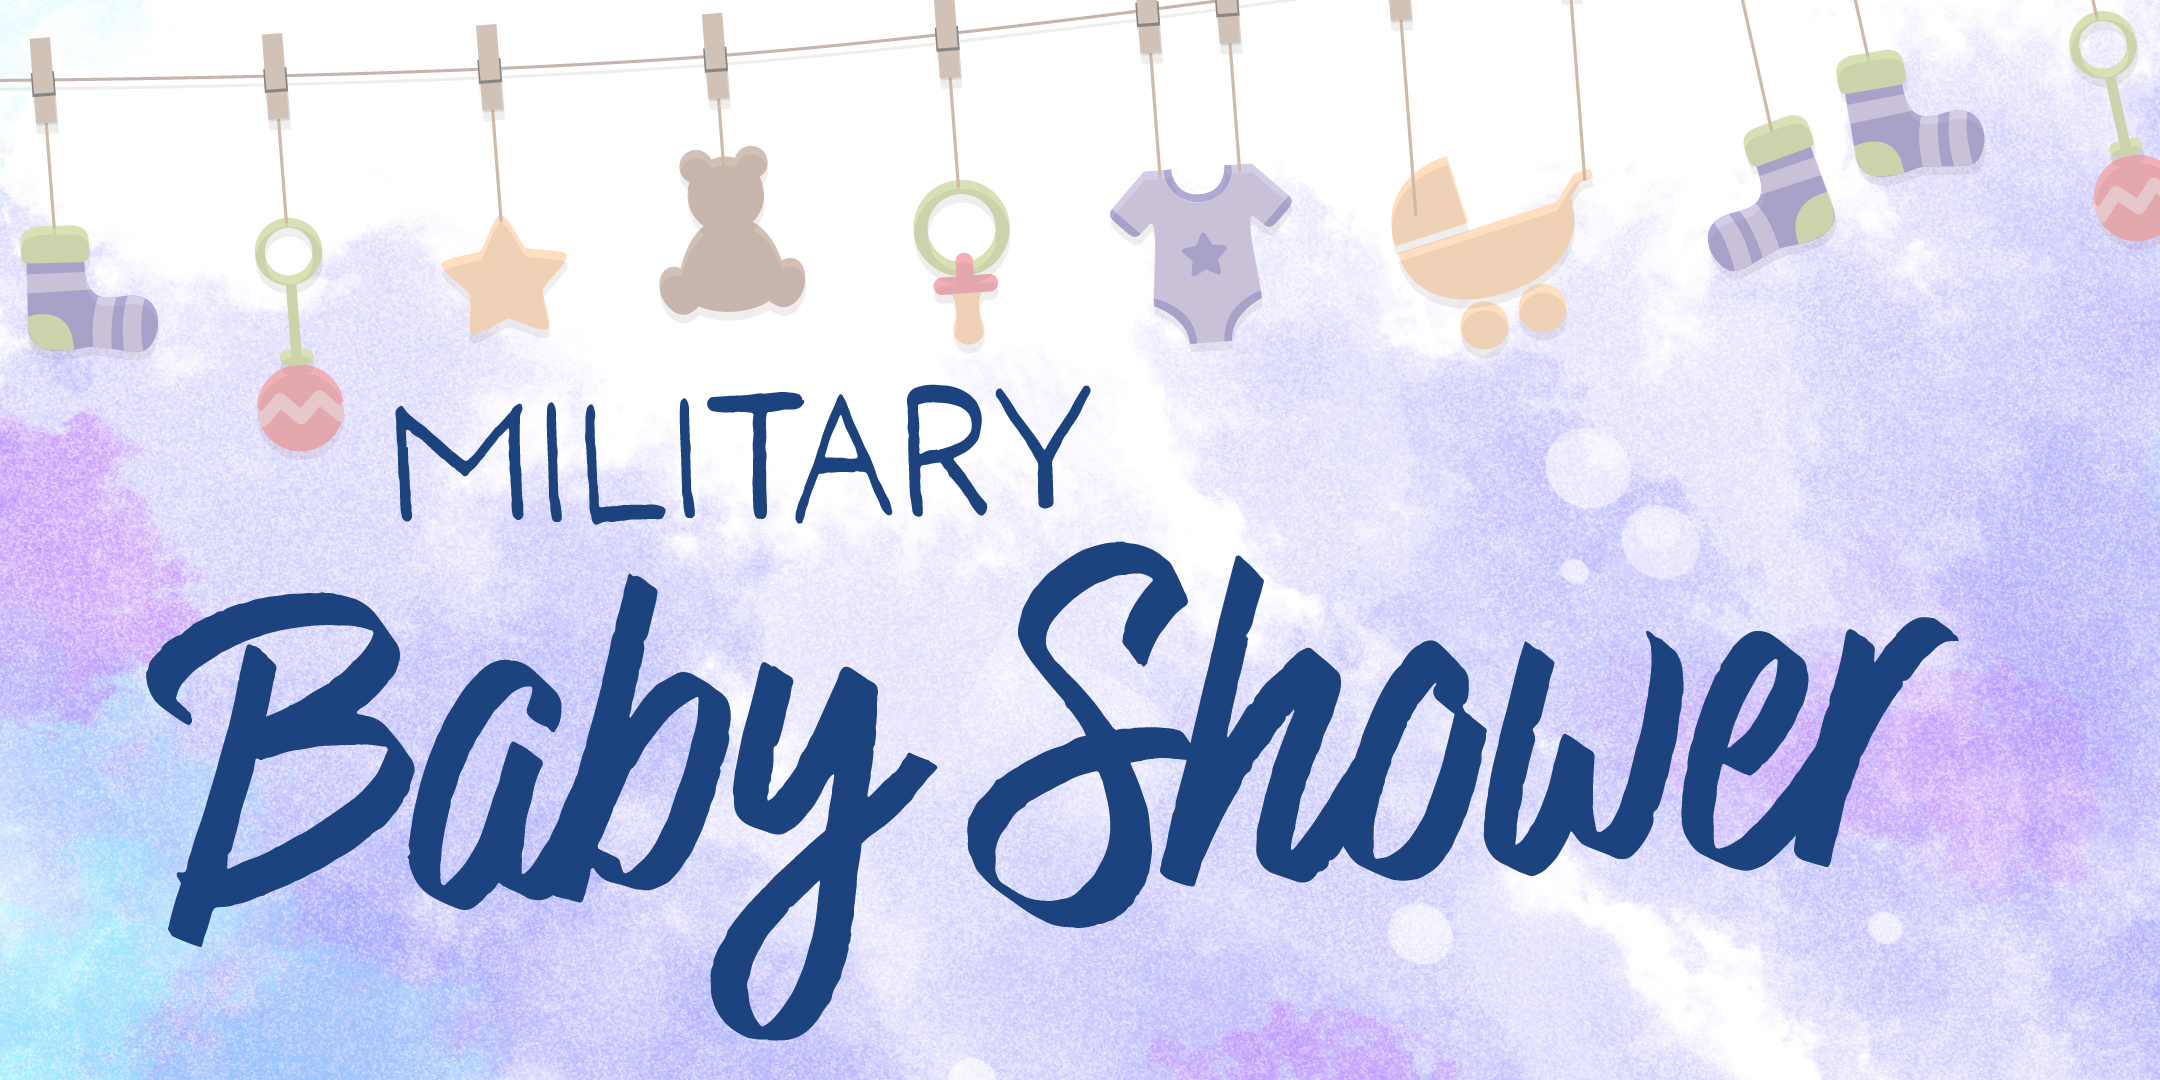 Military Baby Shower